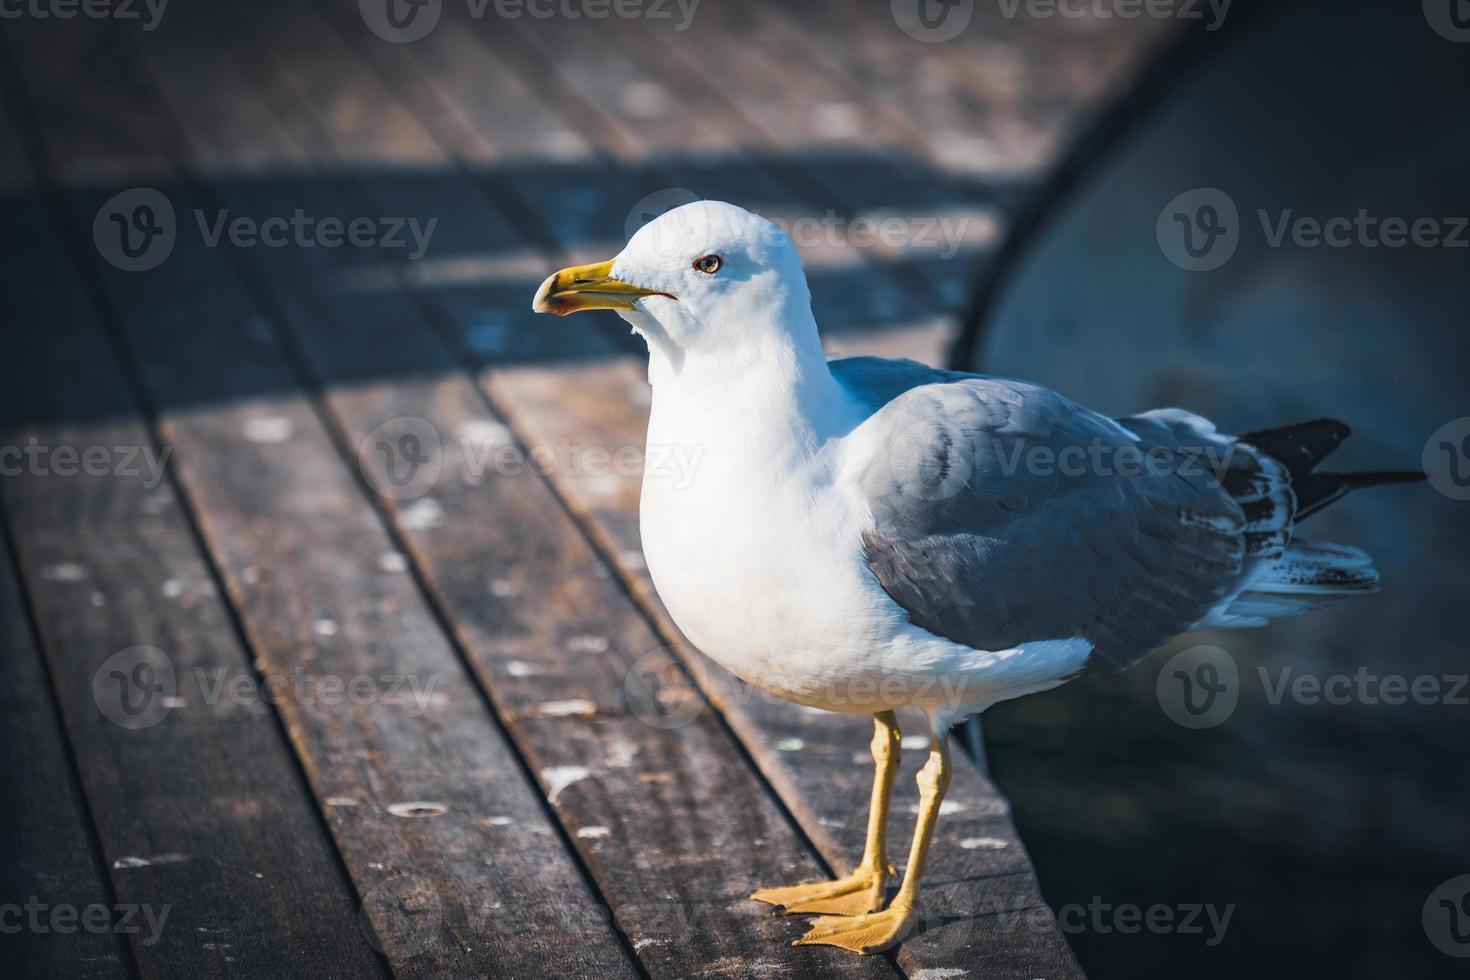 Yellow-legged gull on a wooden walkway photo